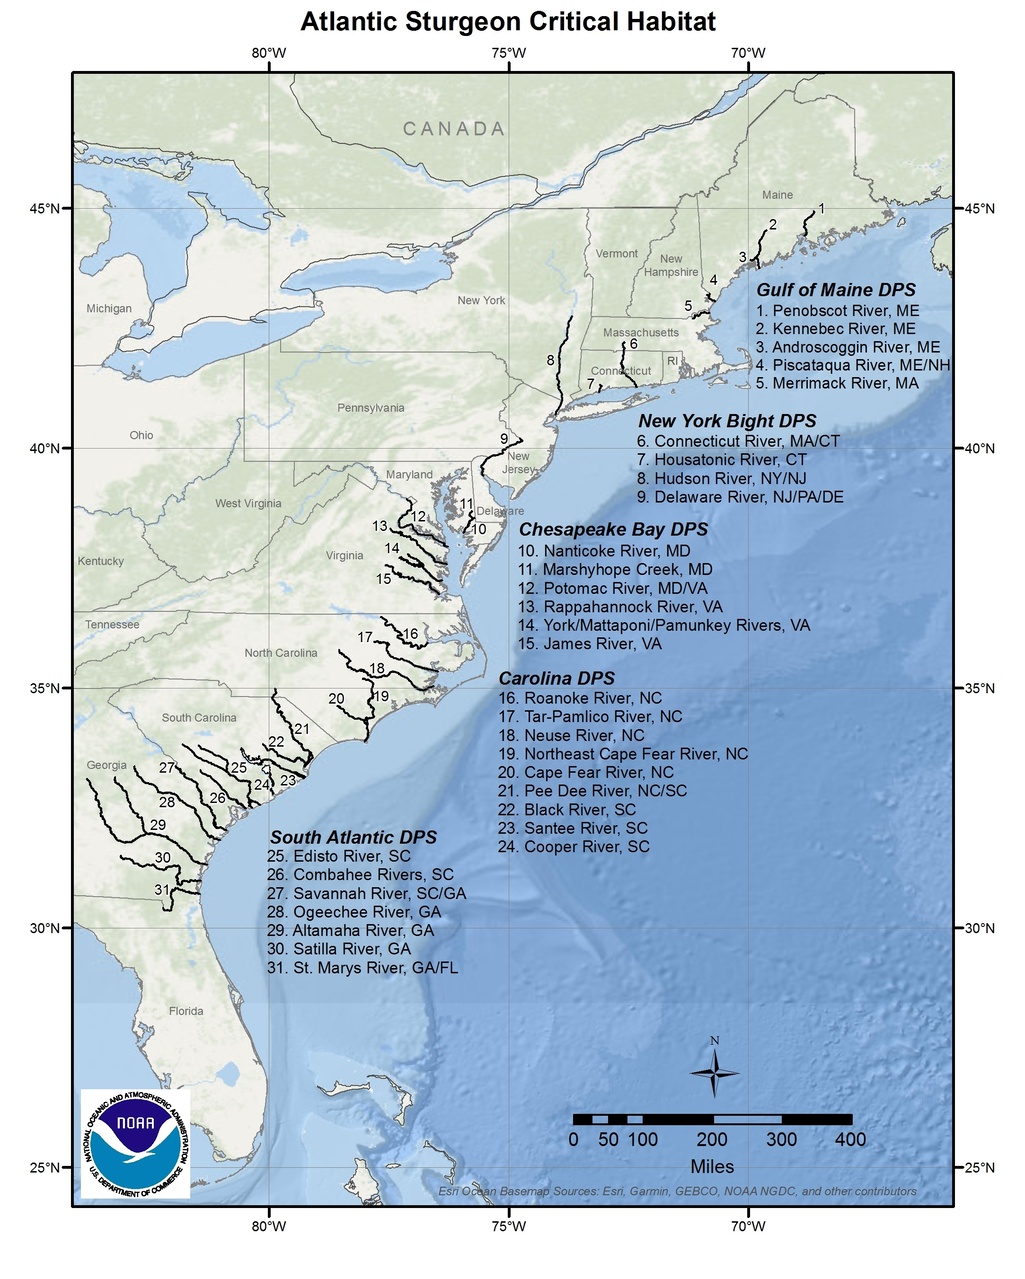 Image: Atlantic Sturgeon Critical Habitat Map and GIS Data